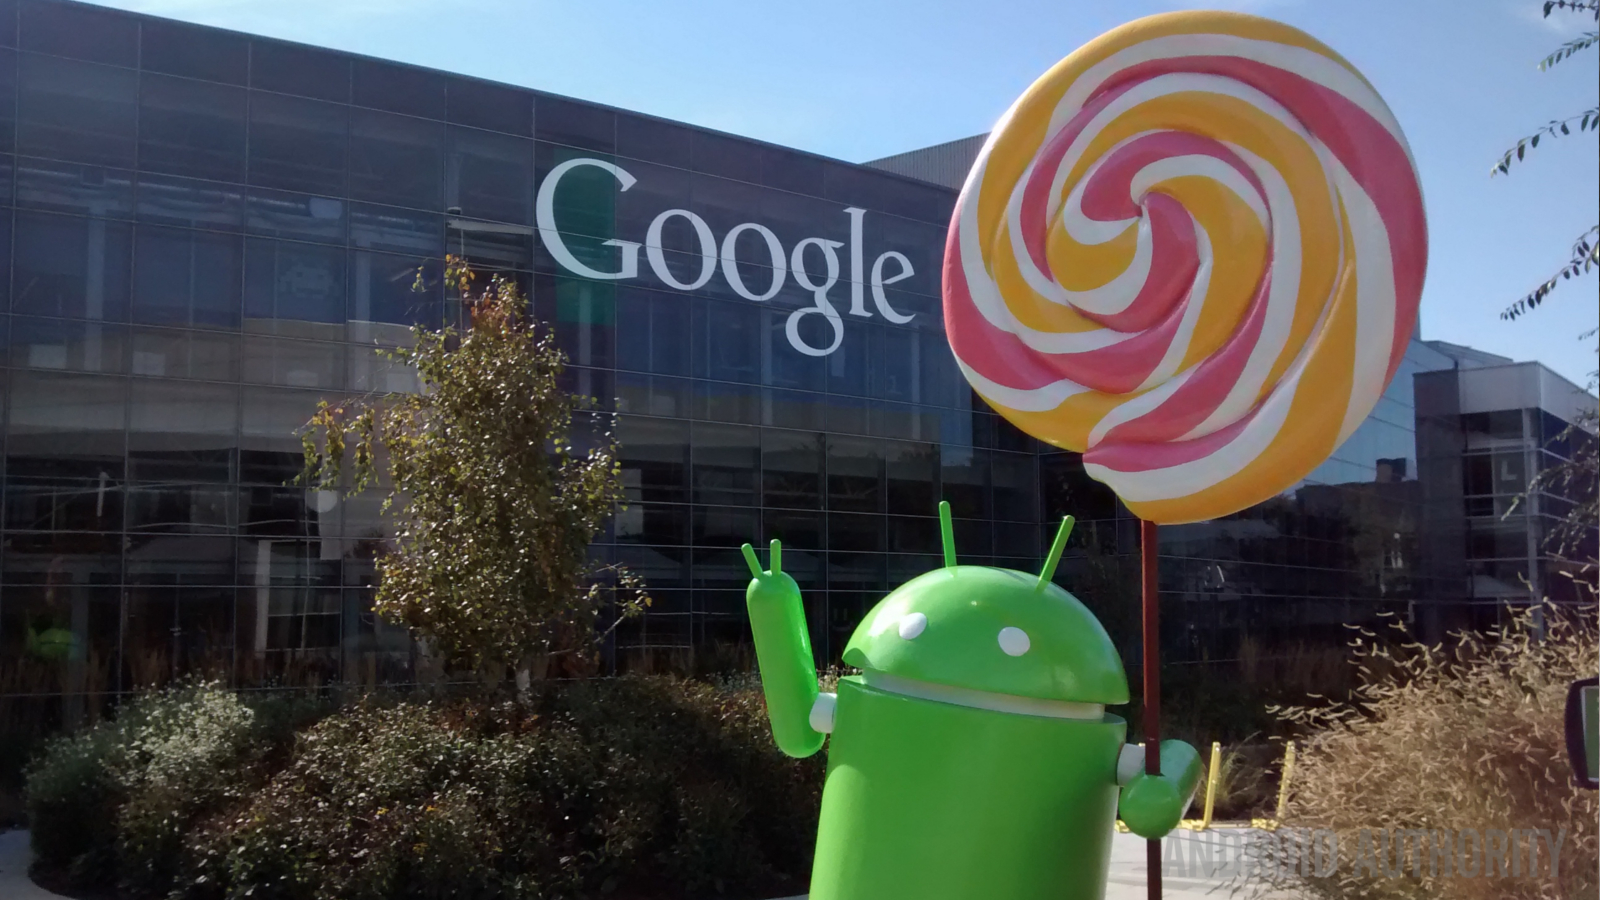 Lollipop statue Android Google logo close